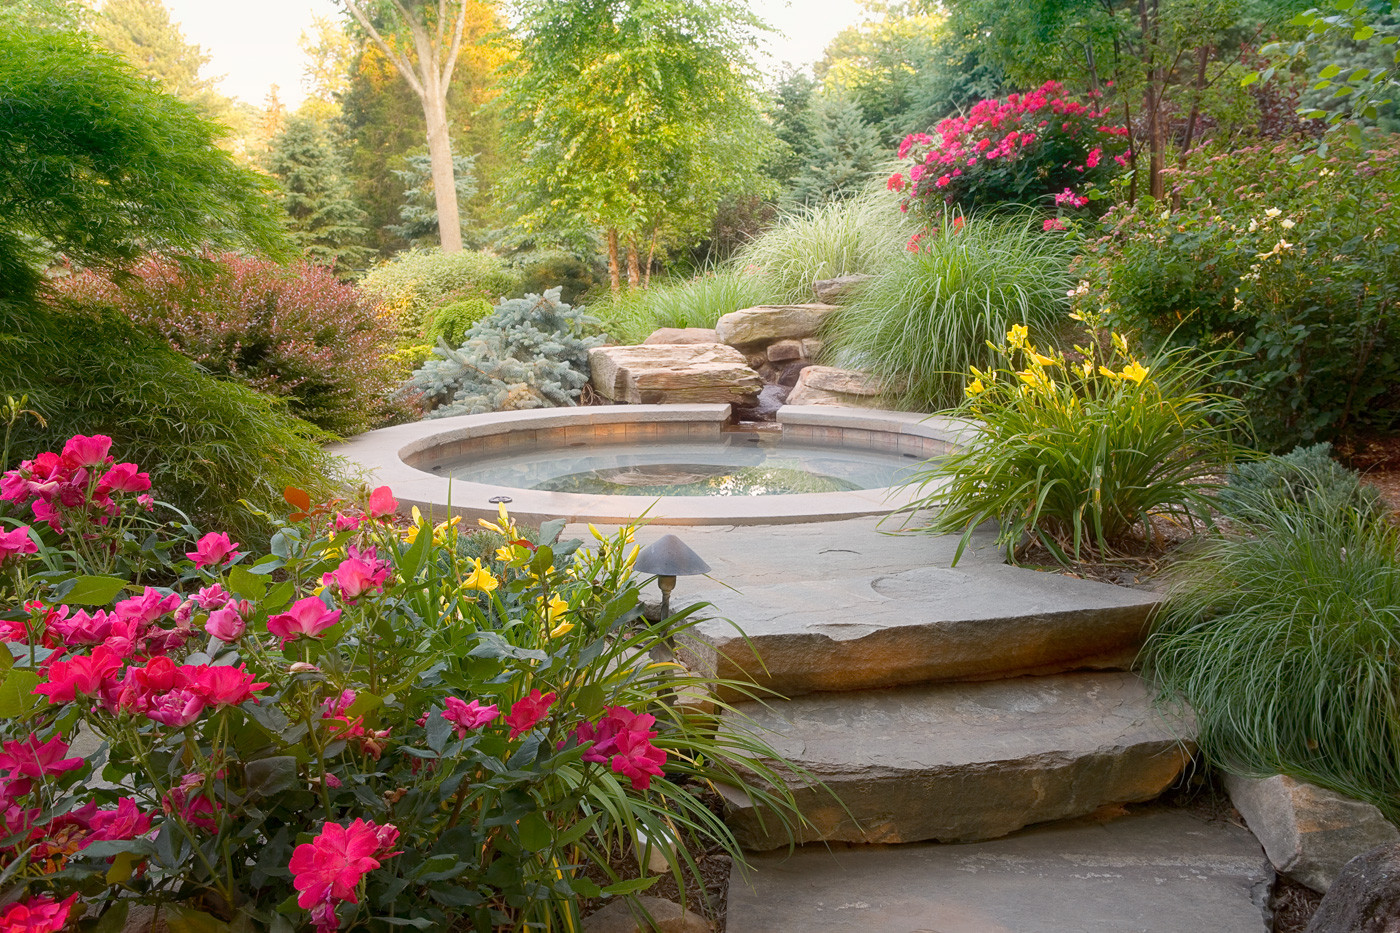 Best ideas about New Jersey Landscape
. Save or Pin Landscape Design Native Home Garden Design Now.